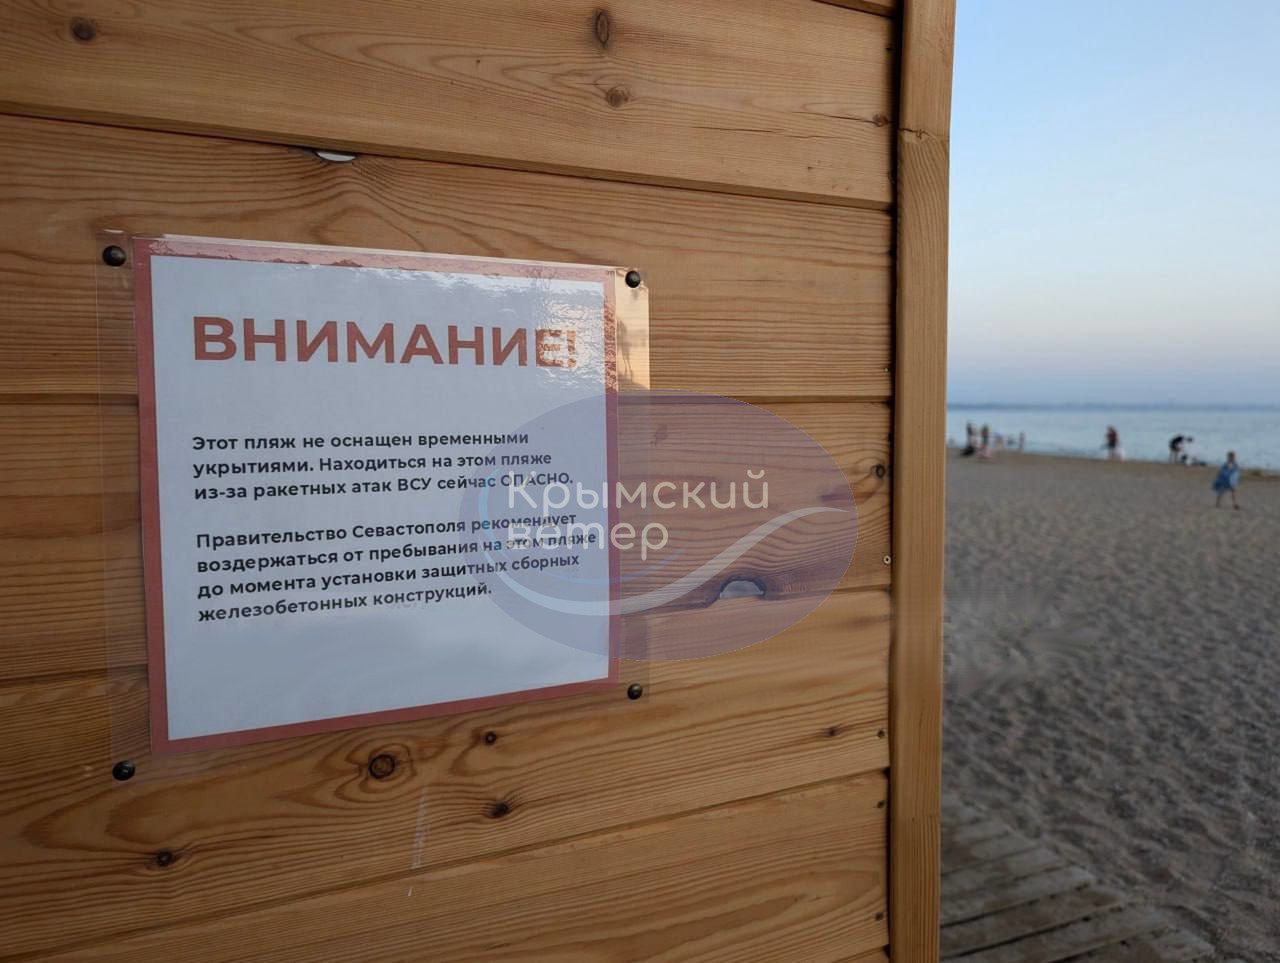 Missile debris in Sevastopol prompts plan for beach shelters